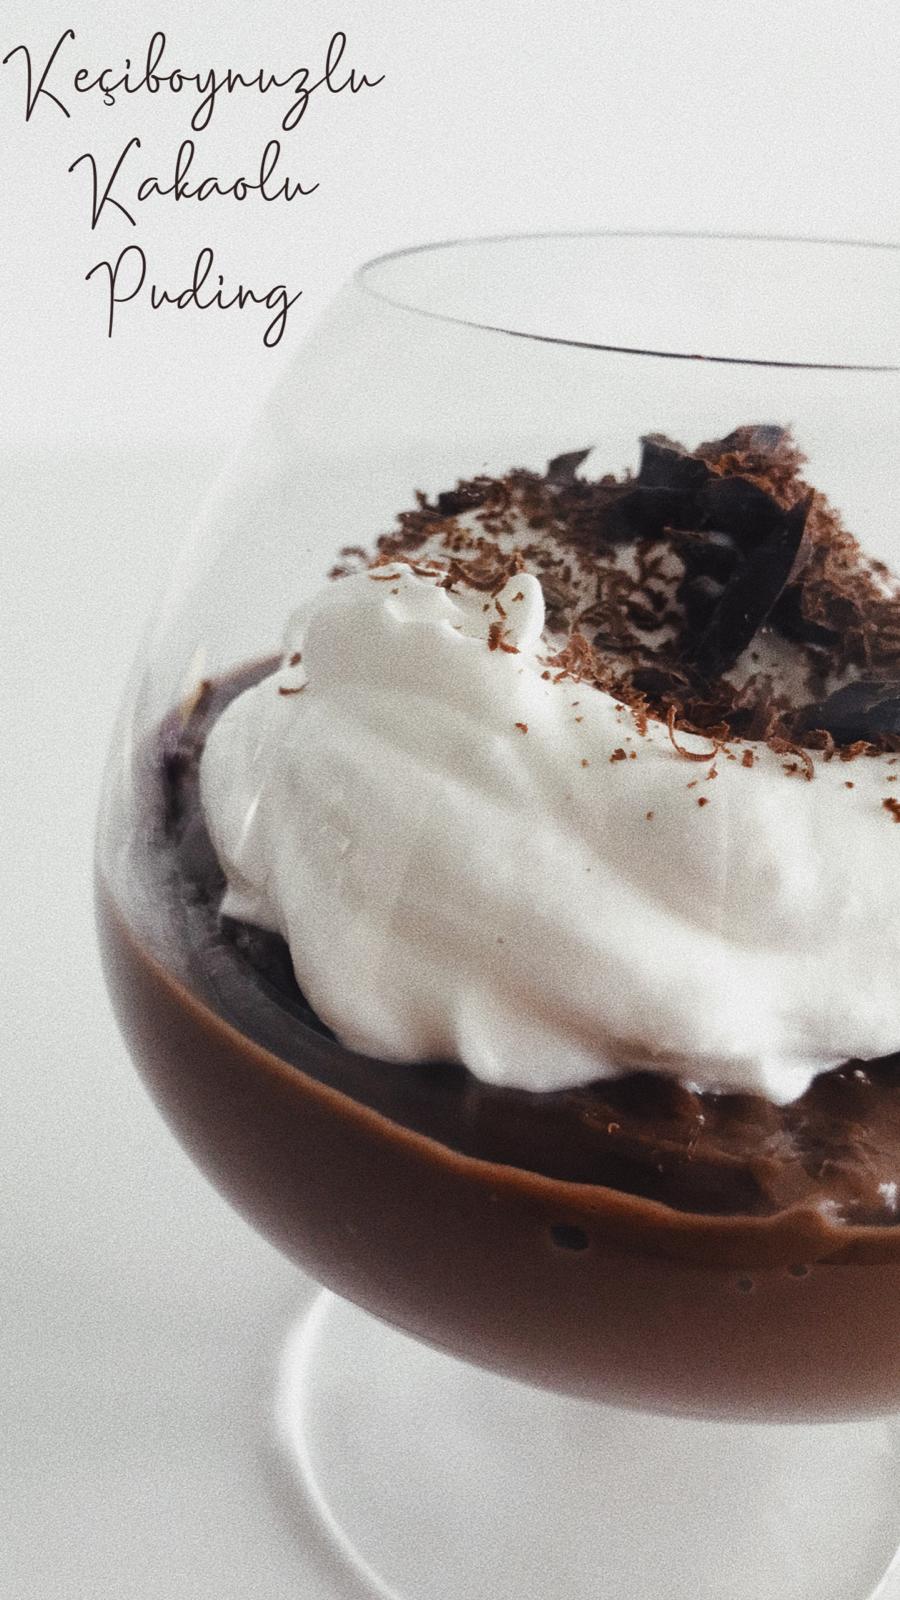 keçiboynuzlu kakaolu pudding-chocolate carob pudding